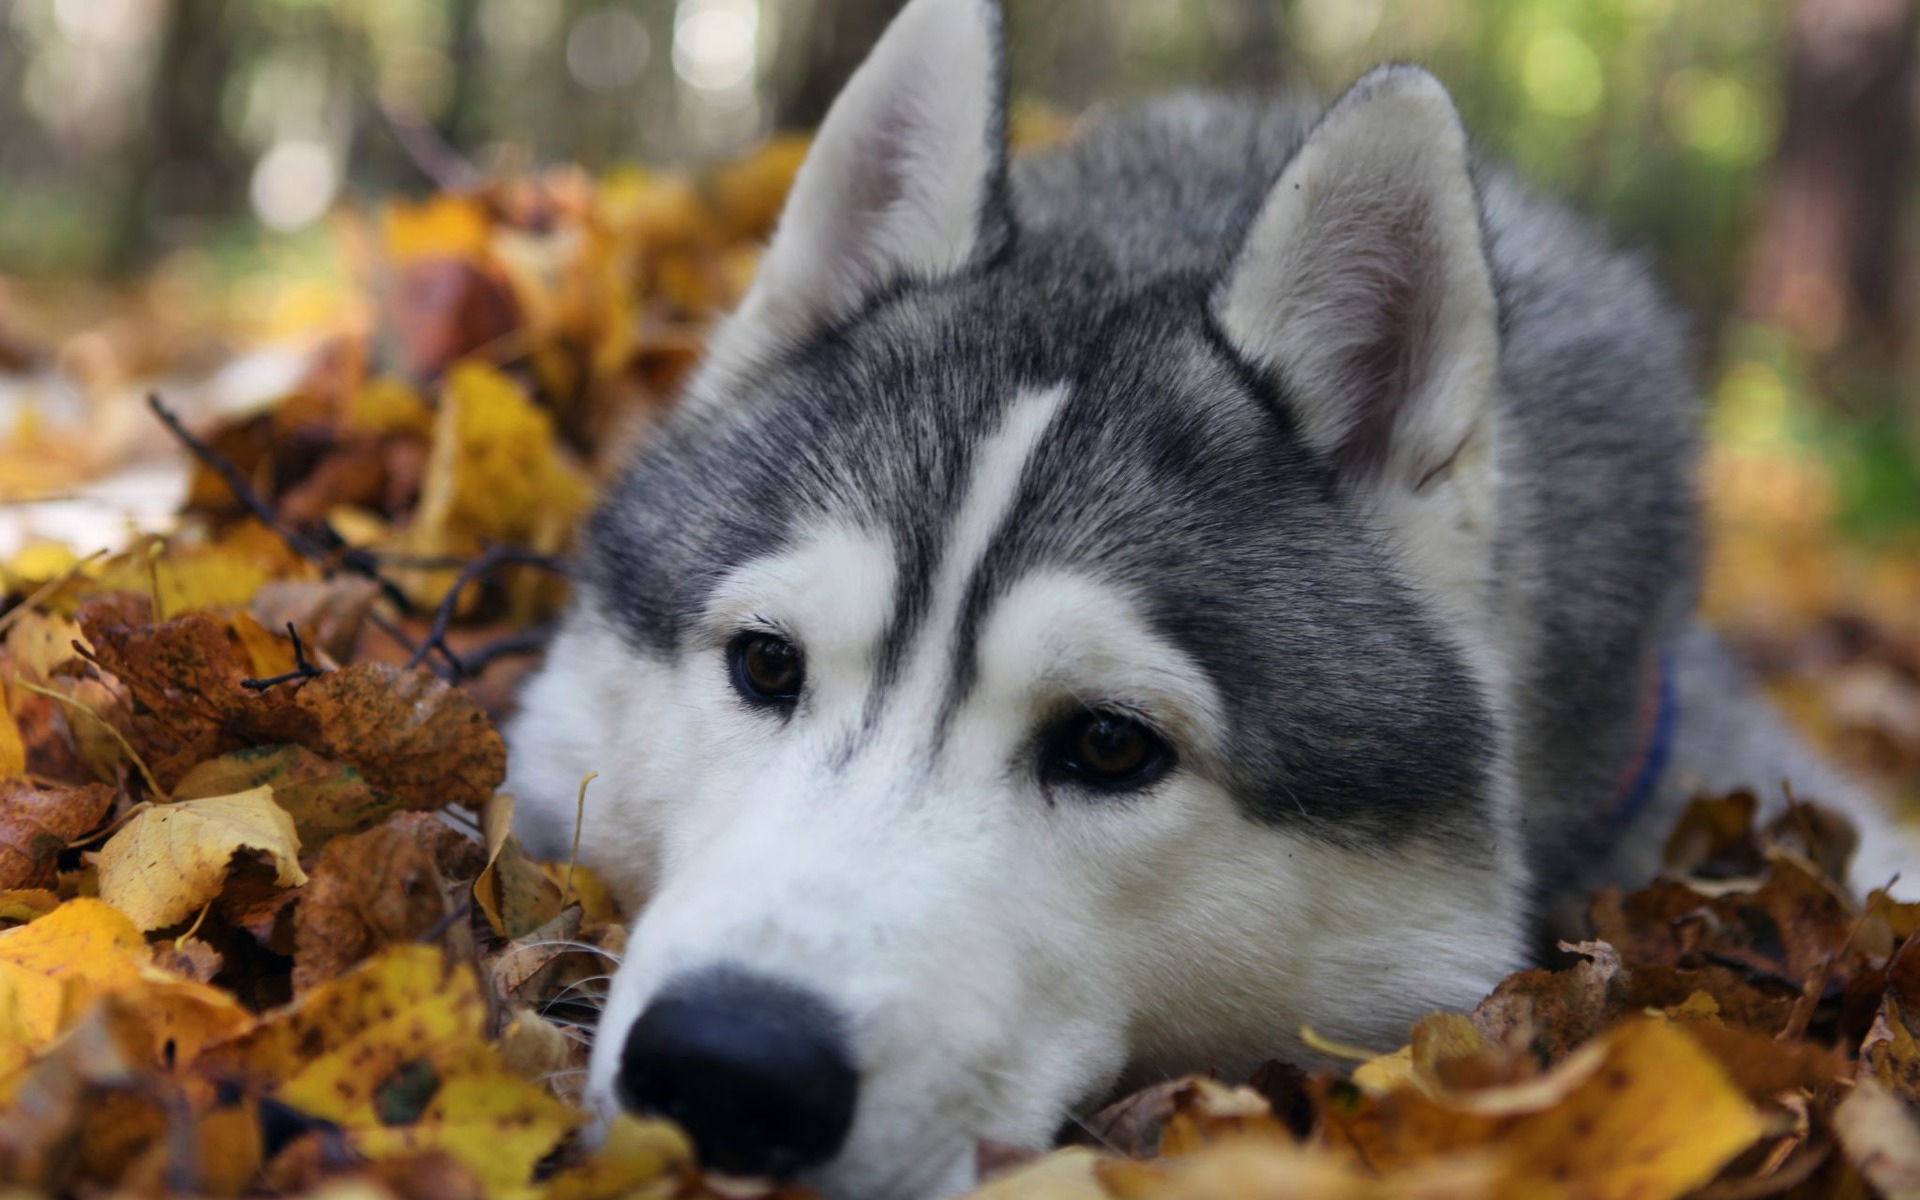 The Alaskan Malamute lying on autumn leaves